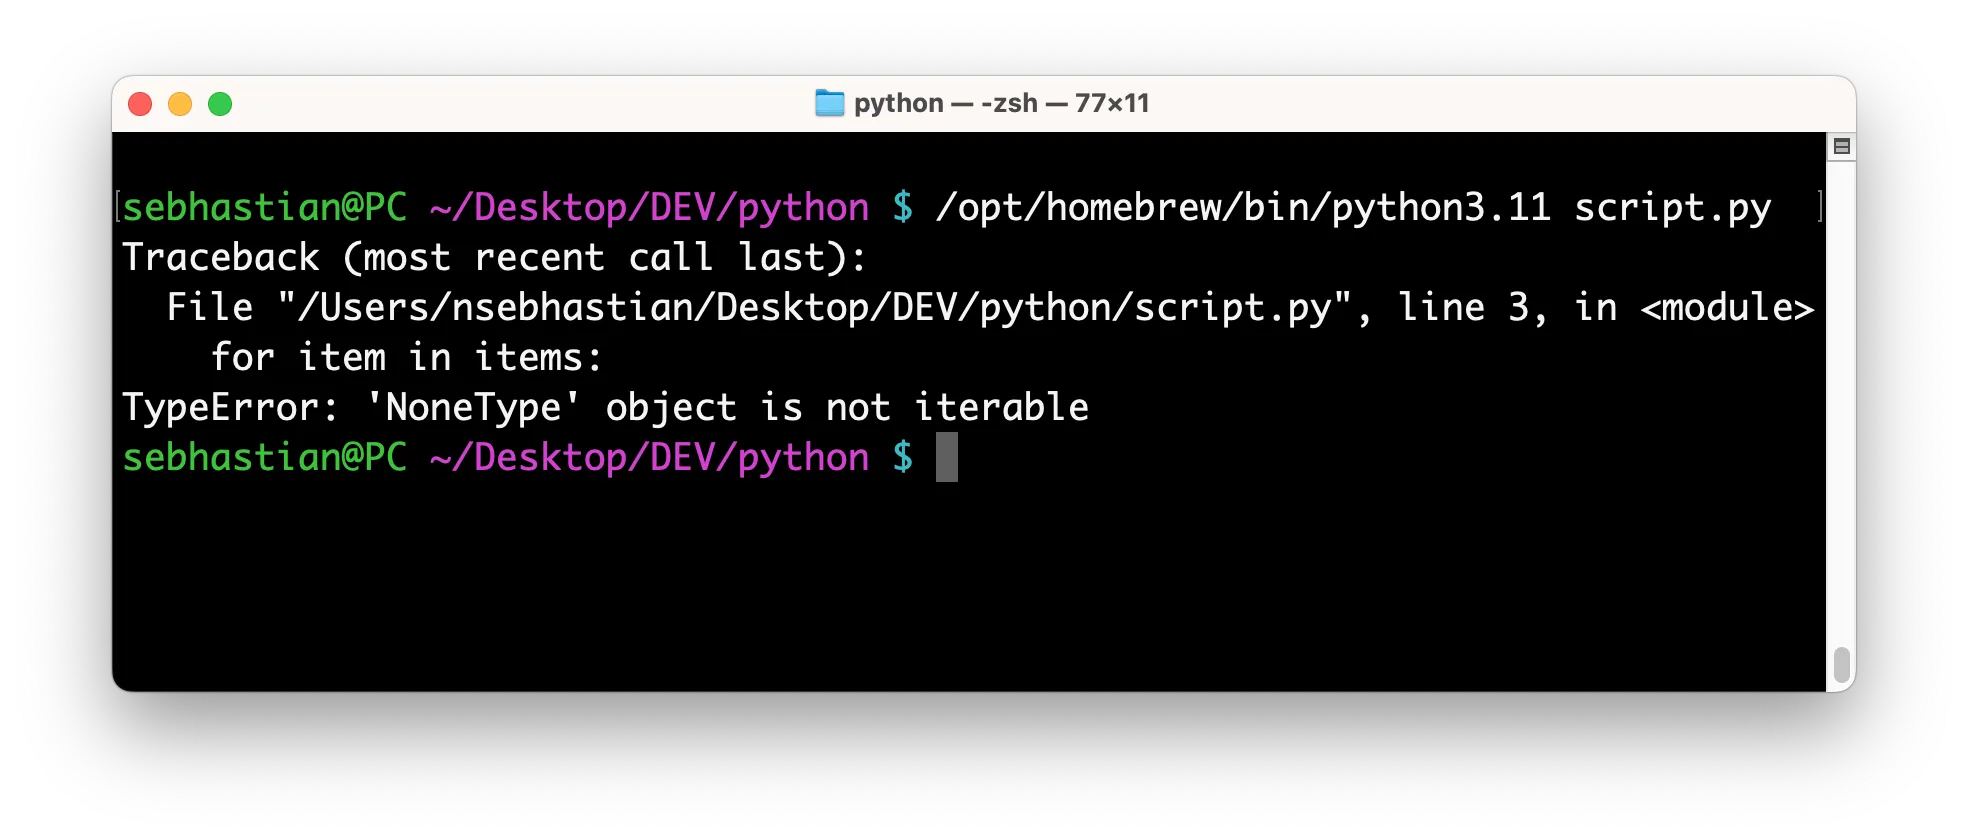 Fix Python Typeerror: 'Nonetype' Object Is Not Iterable | Sebhastian